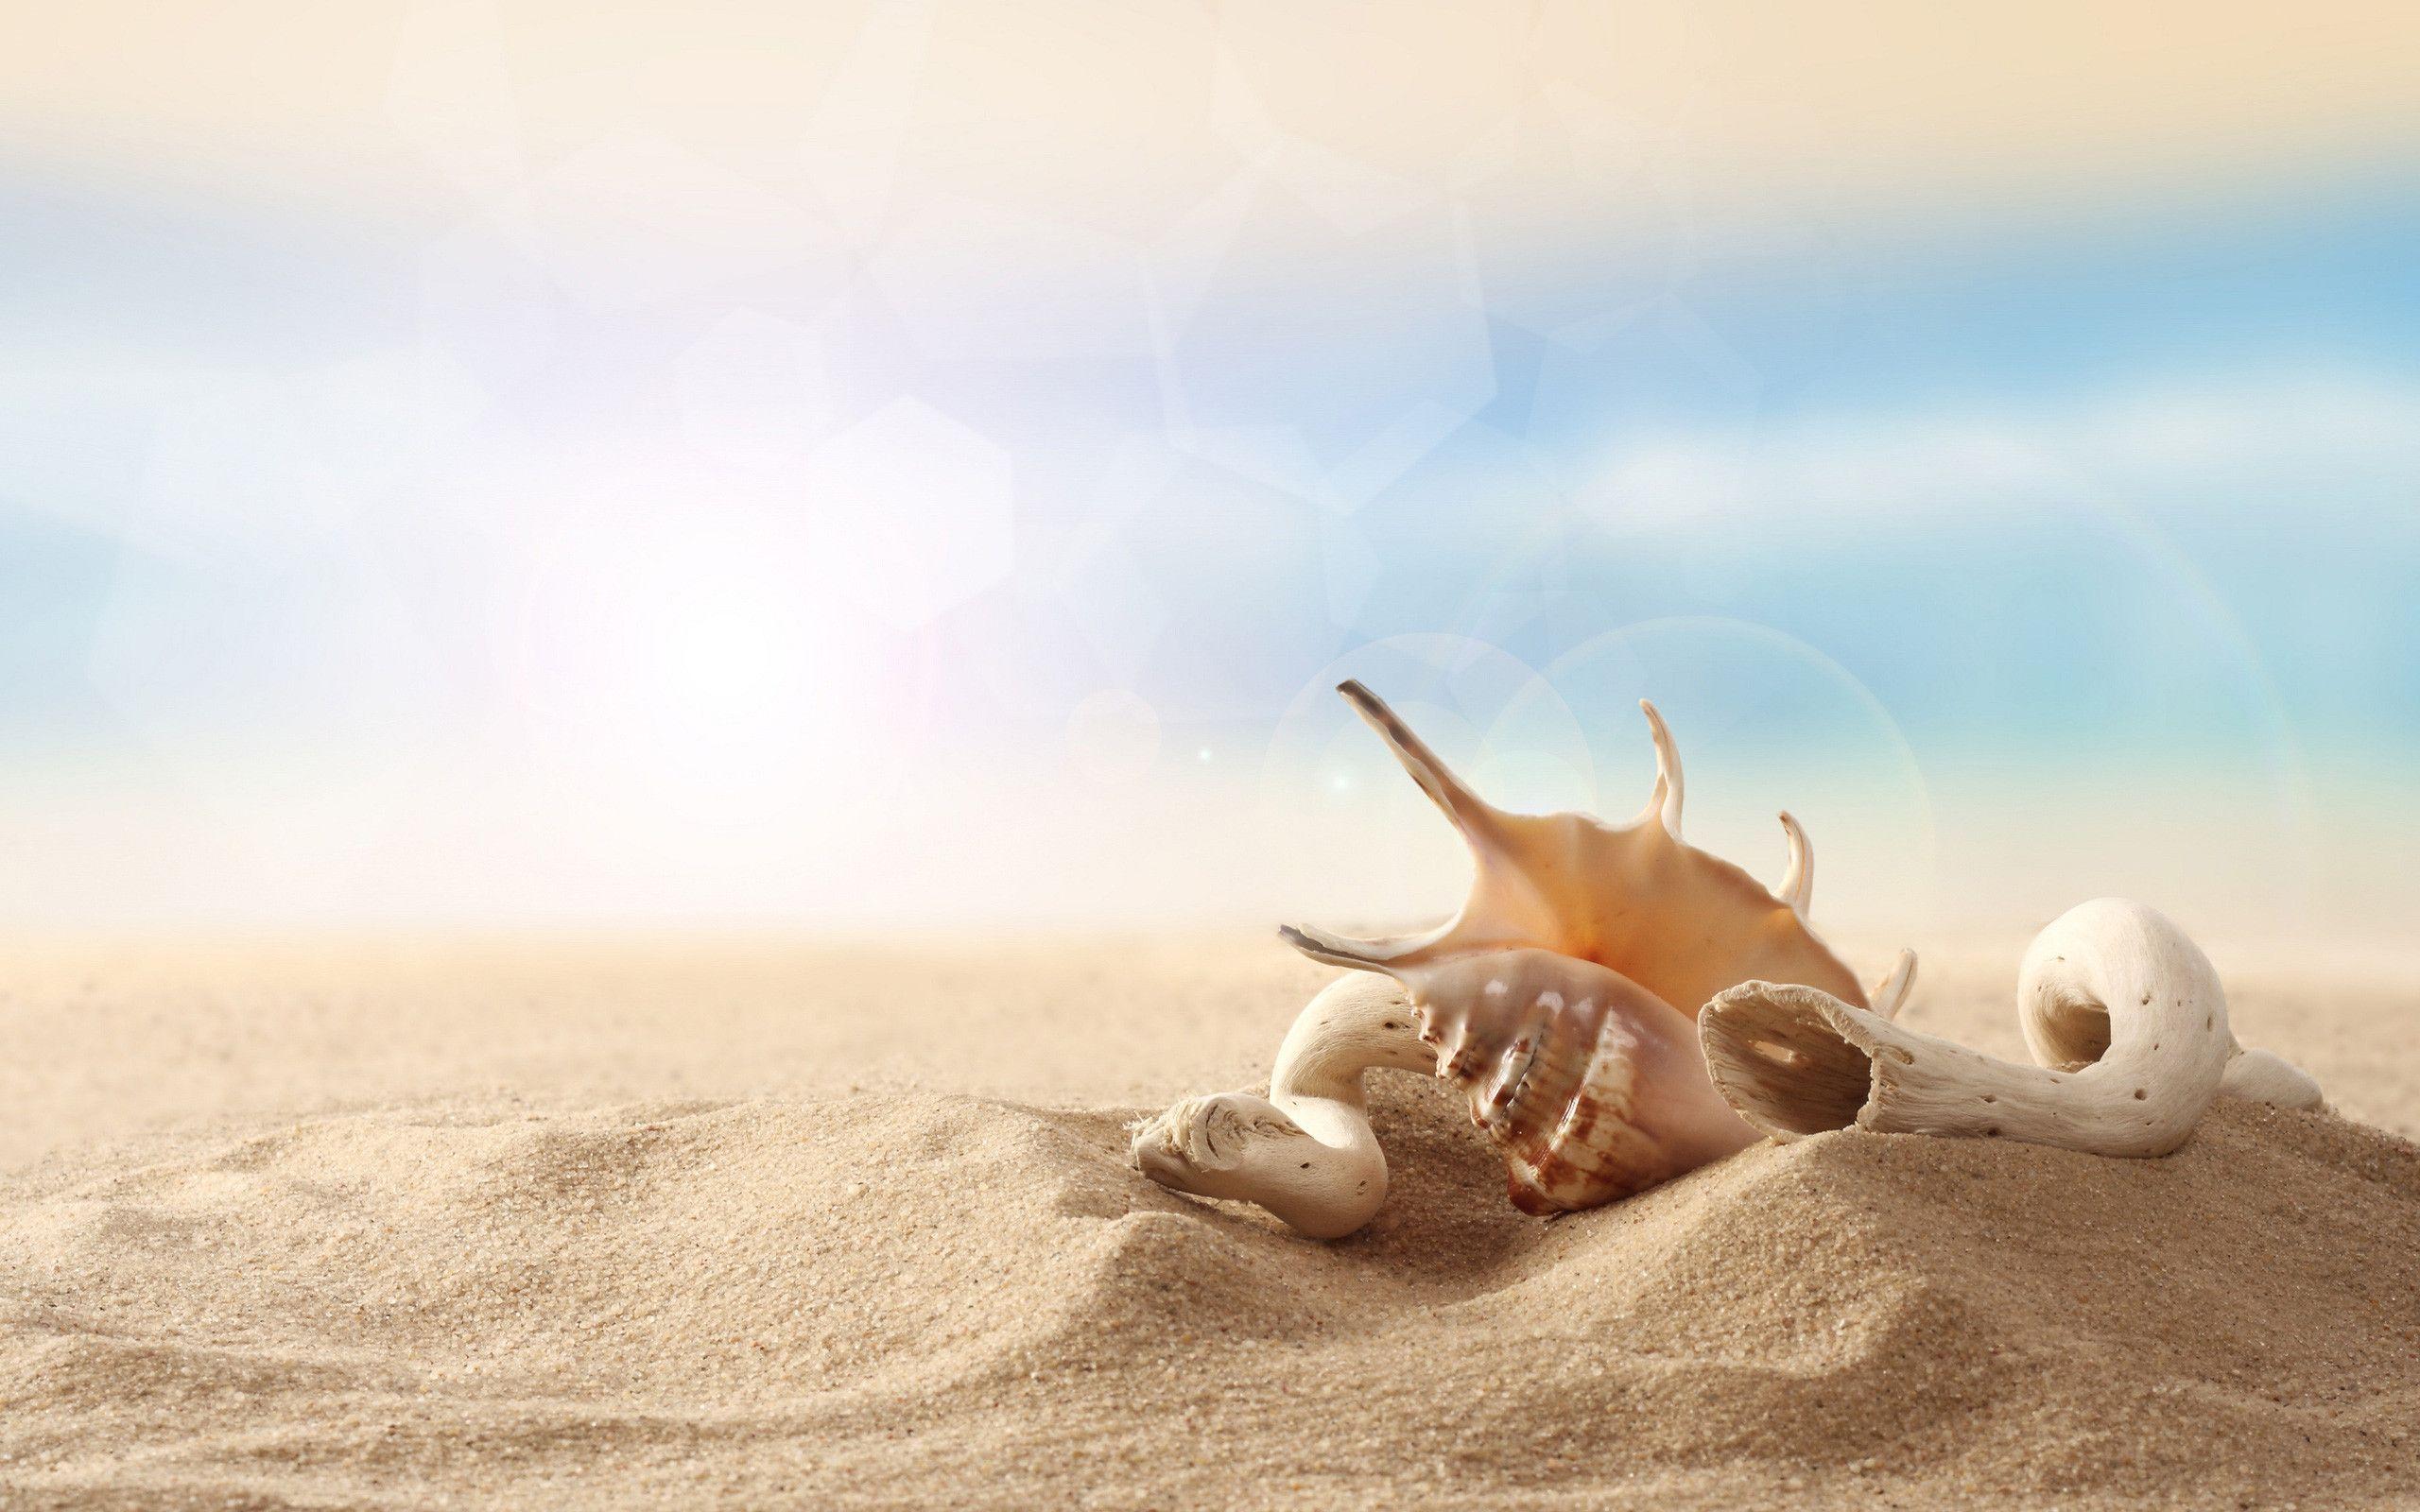 Download Seashell Sand Wallpaper 17111 2560x1600 px High